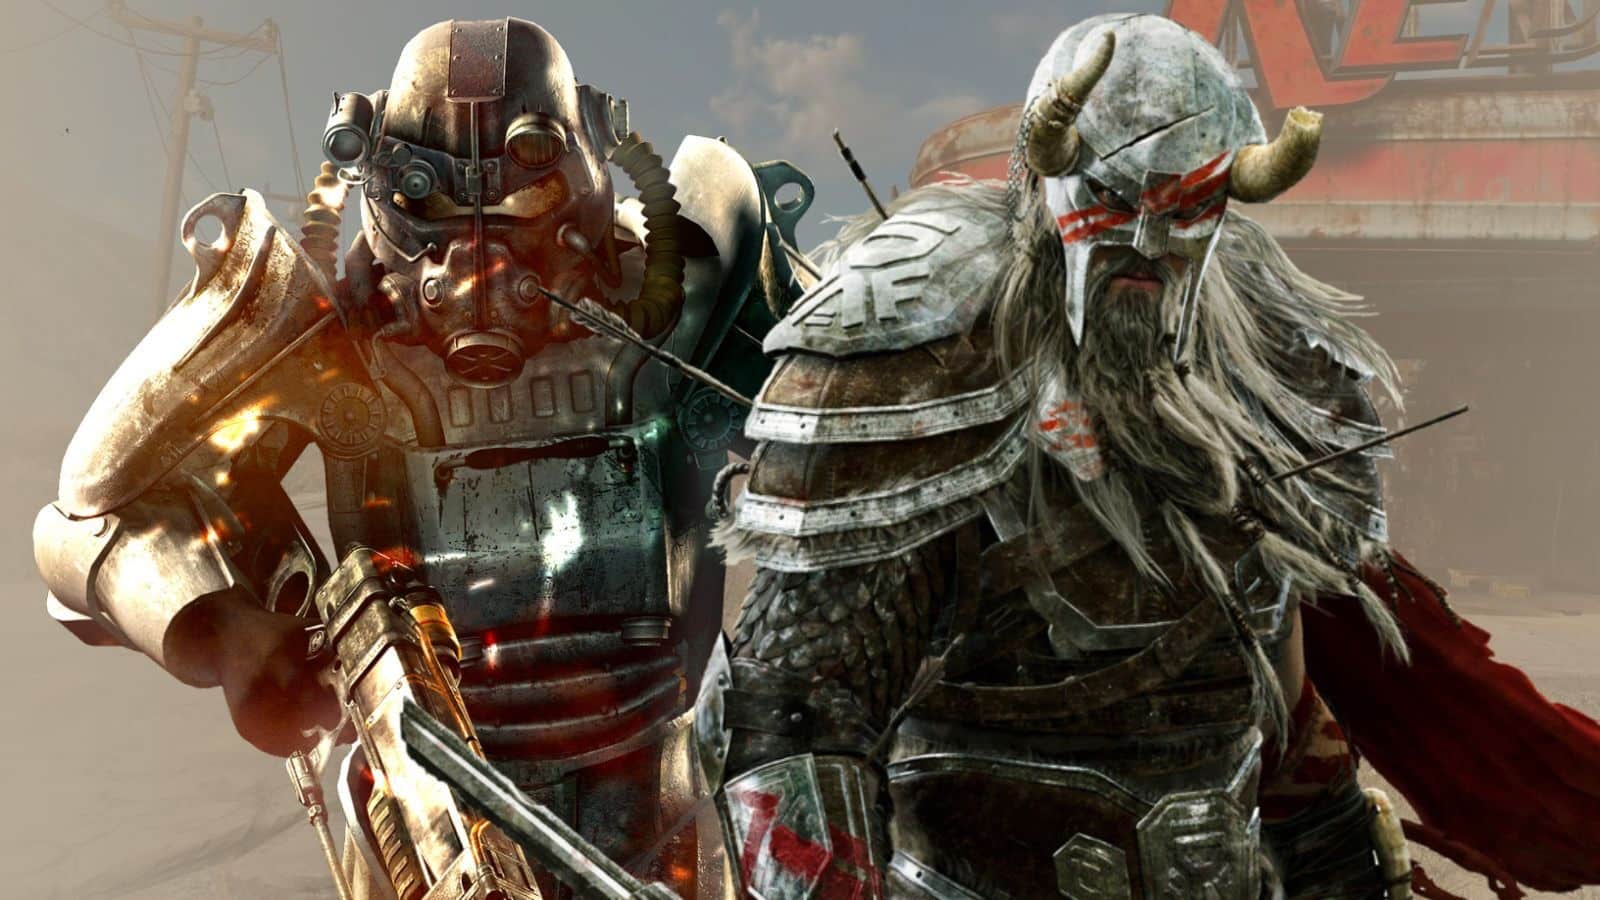 Bethesda confirms Elder Scrolls 6 has entered early development - Dexerto